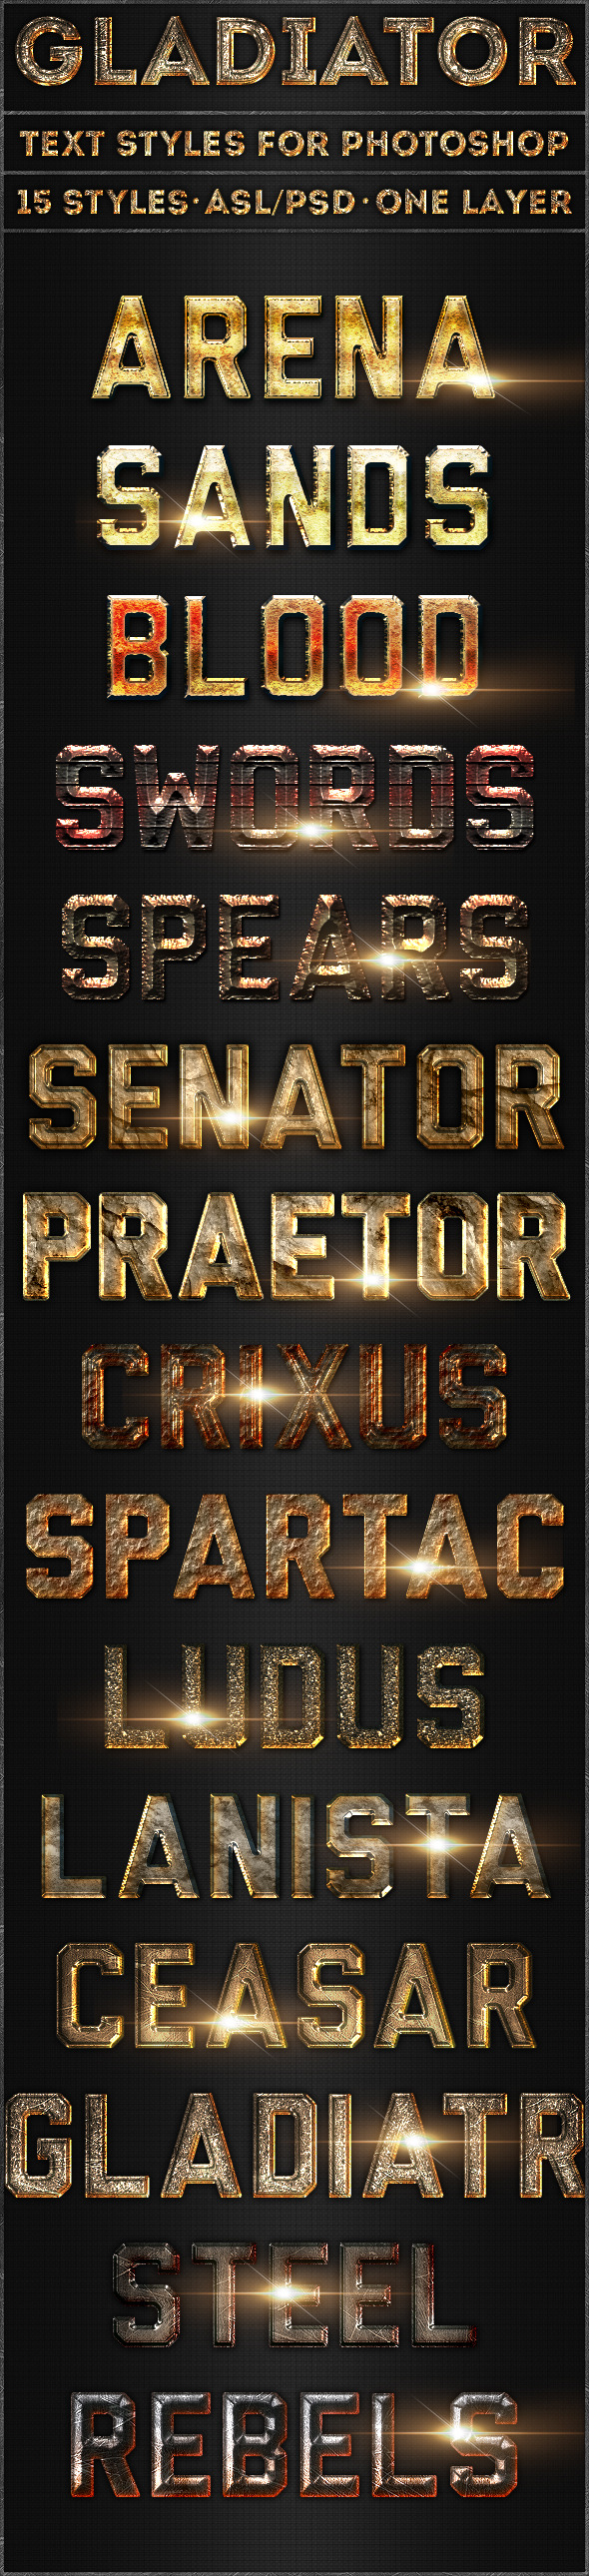 Gladiator - Text Styles